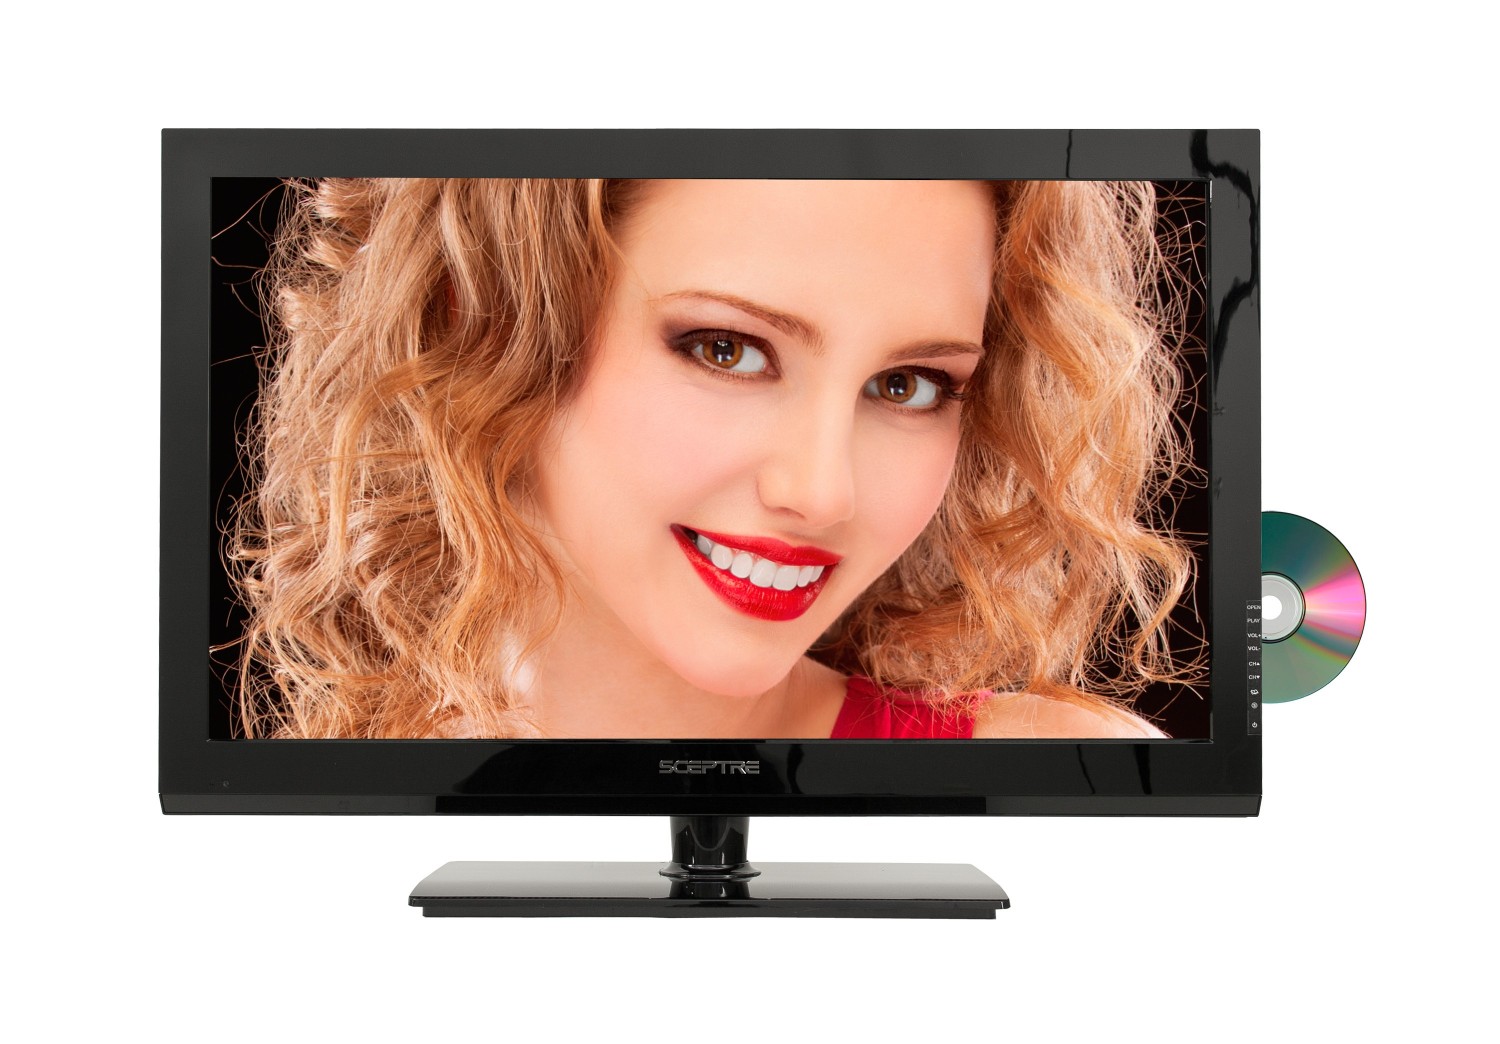 Buy the KONIC KDL32WE330 32 12V Smart TV Dual TV Tuner - WebOS